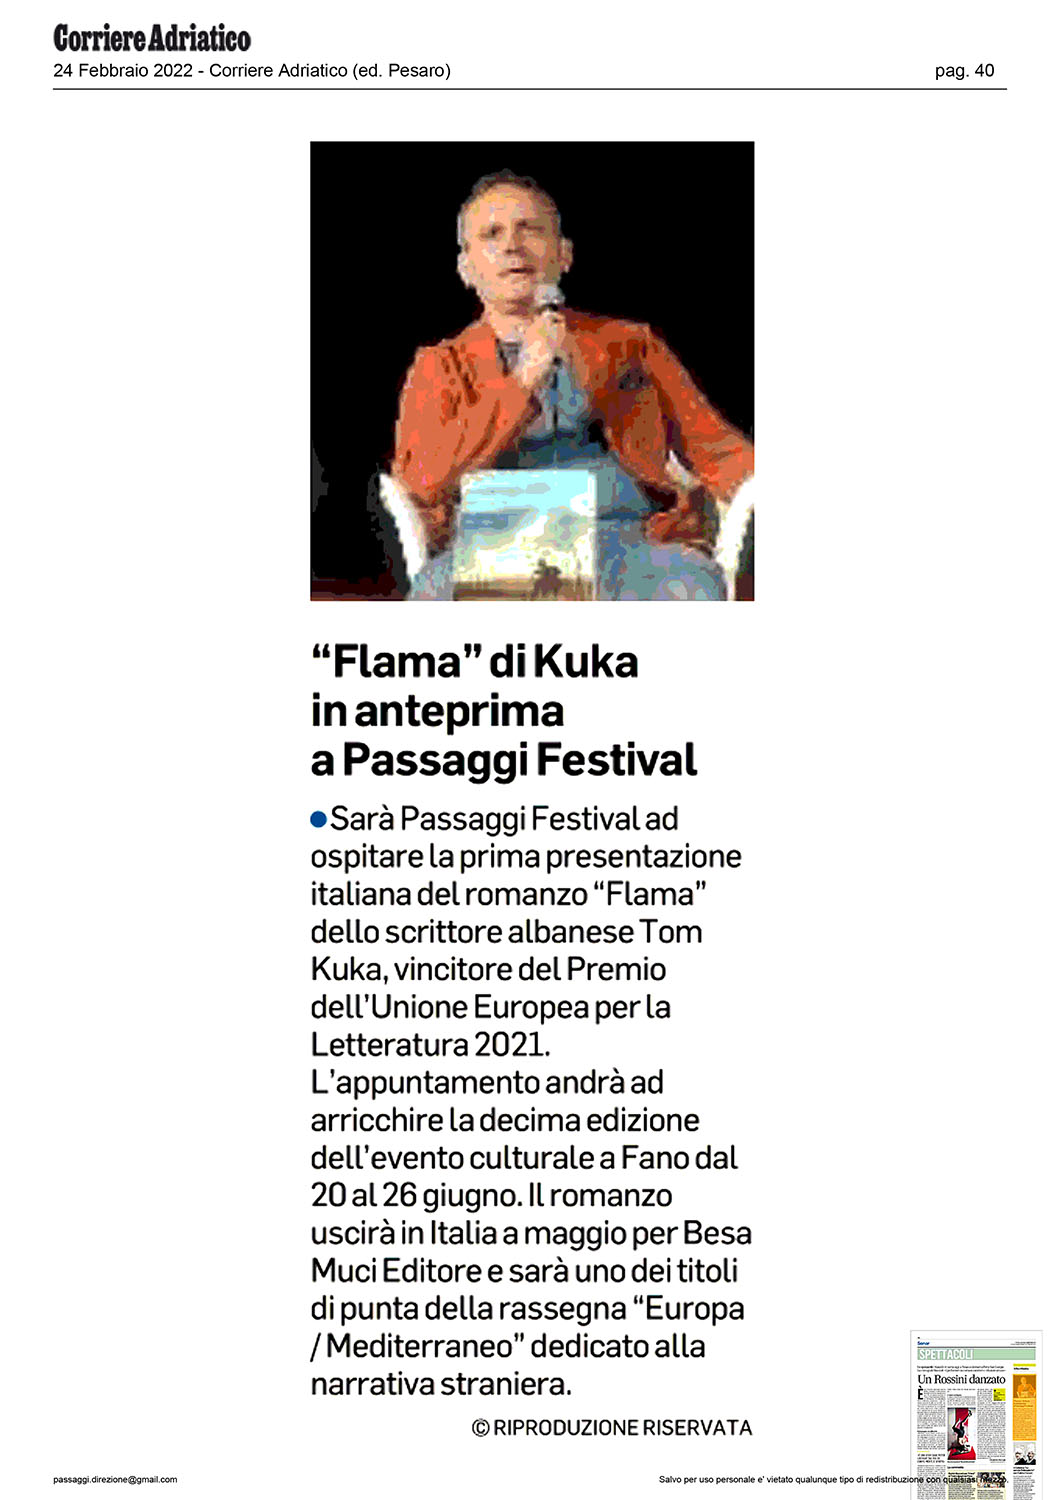 corriere_adriatico_flama-di-kuka-in-anteprima-a-passaggi-festival